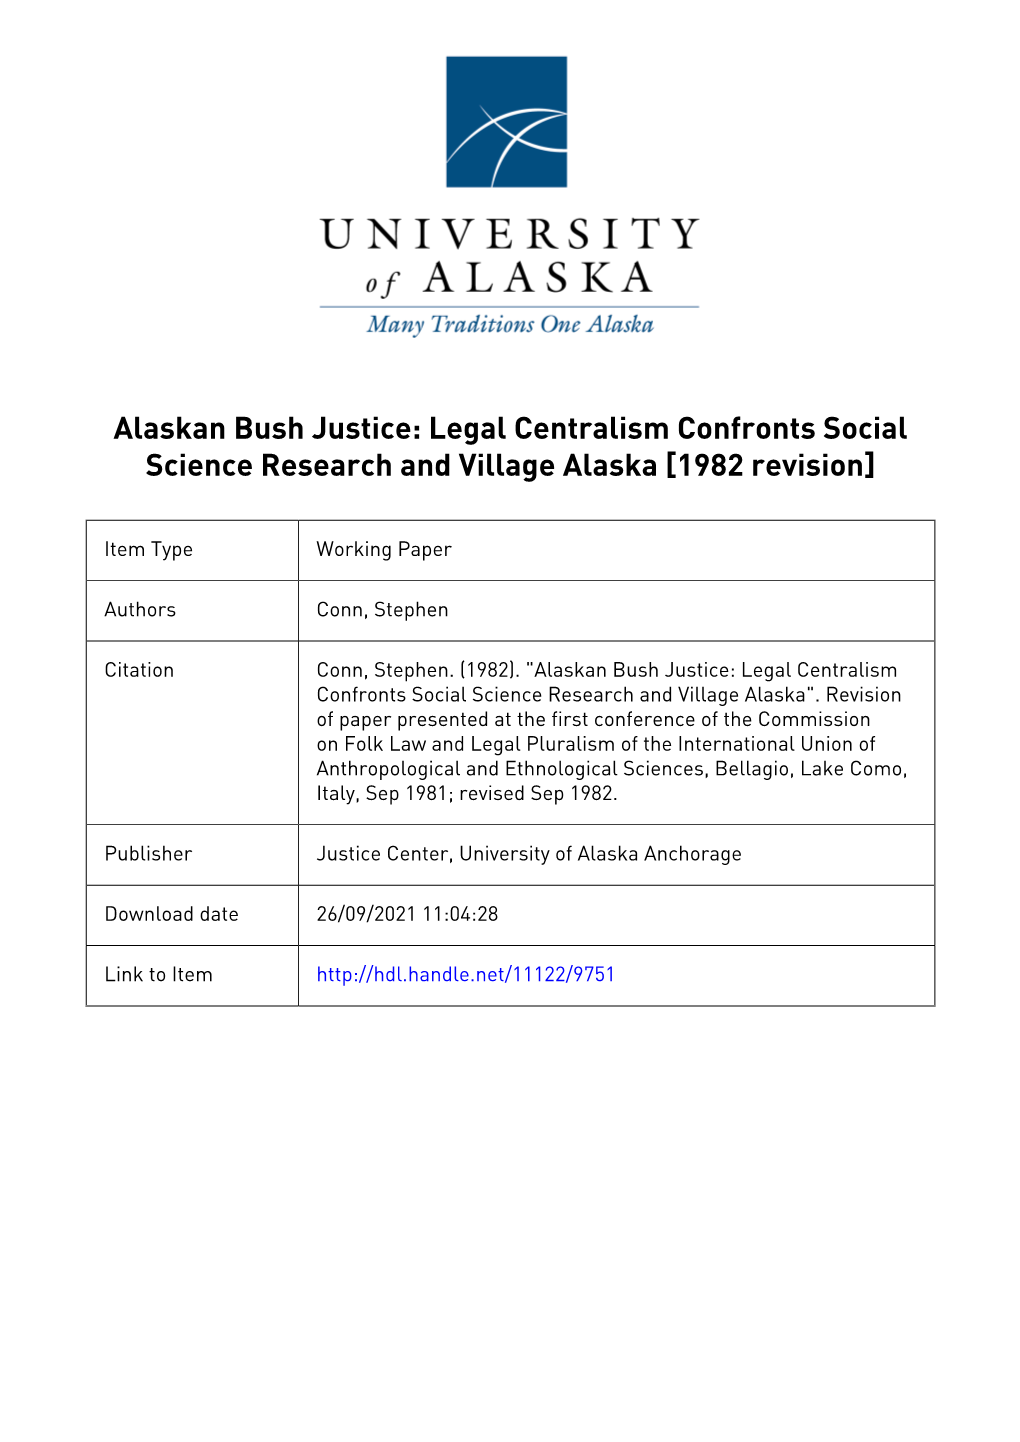 Alaskan Bush Justice: Legal Centralism Confronts Social Science Research and Village Alaska [1982 Revision]